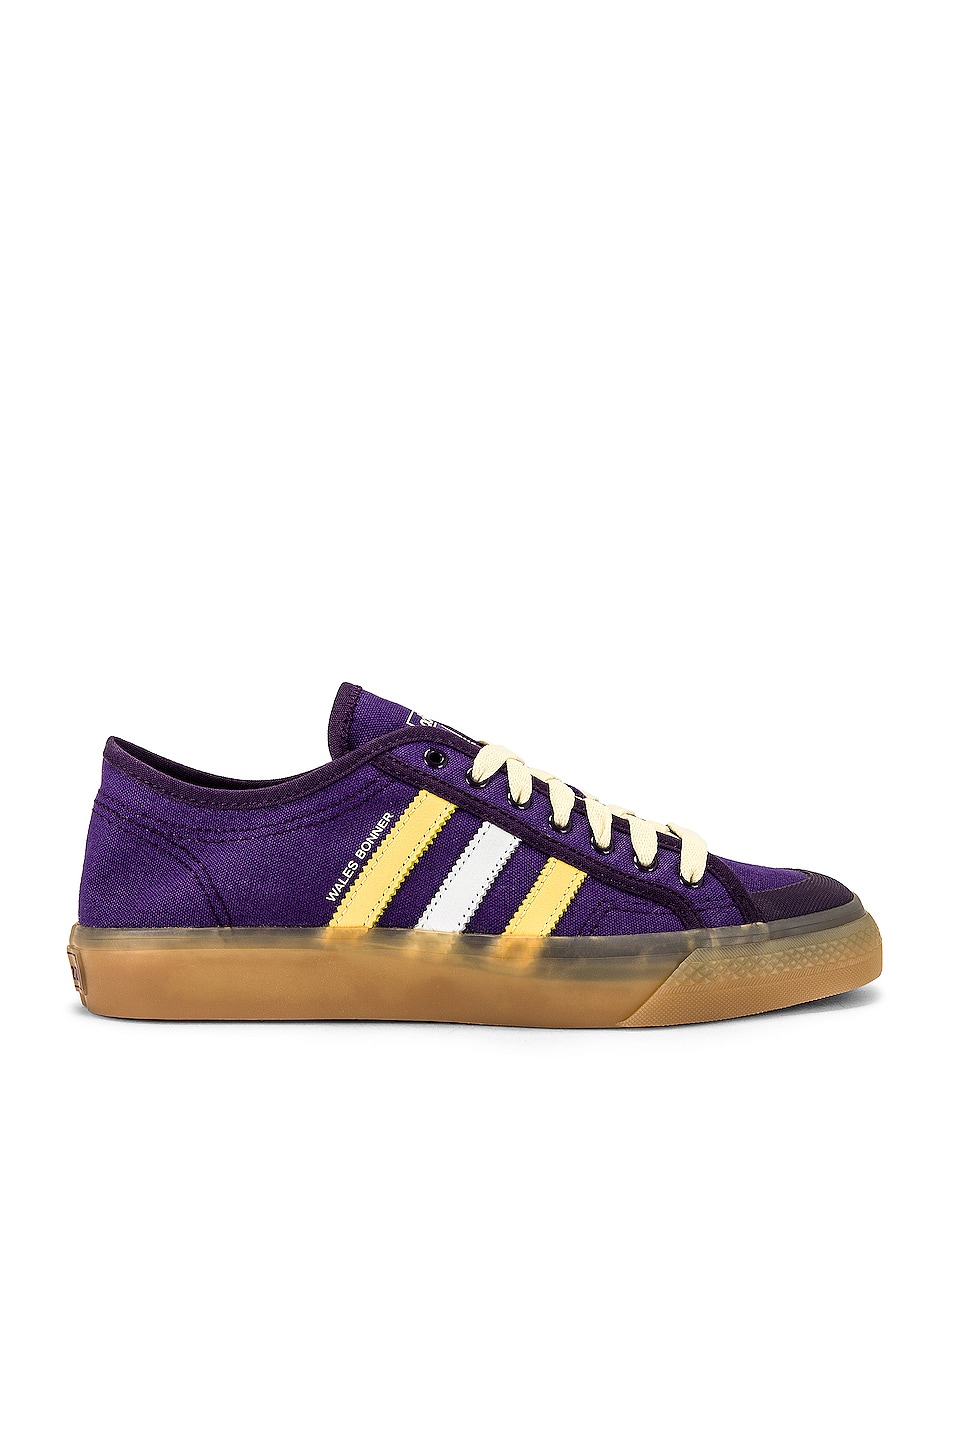 Image 1 of adidas by Wales Bonner Nizza Lo in Unity Purple & Glaze